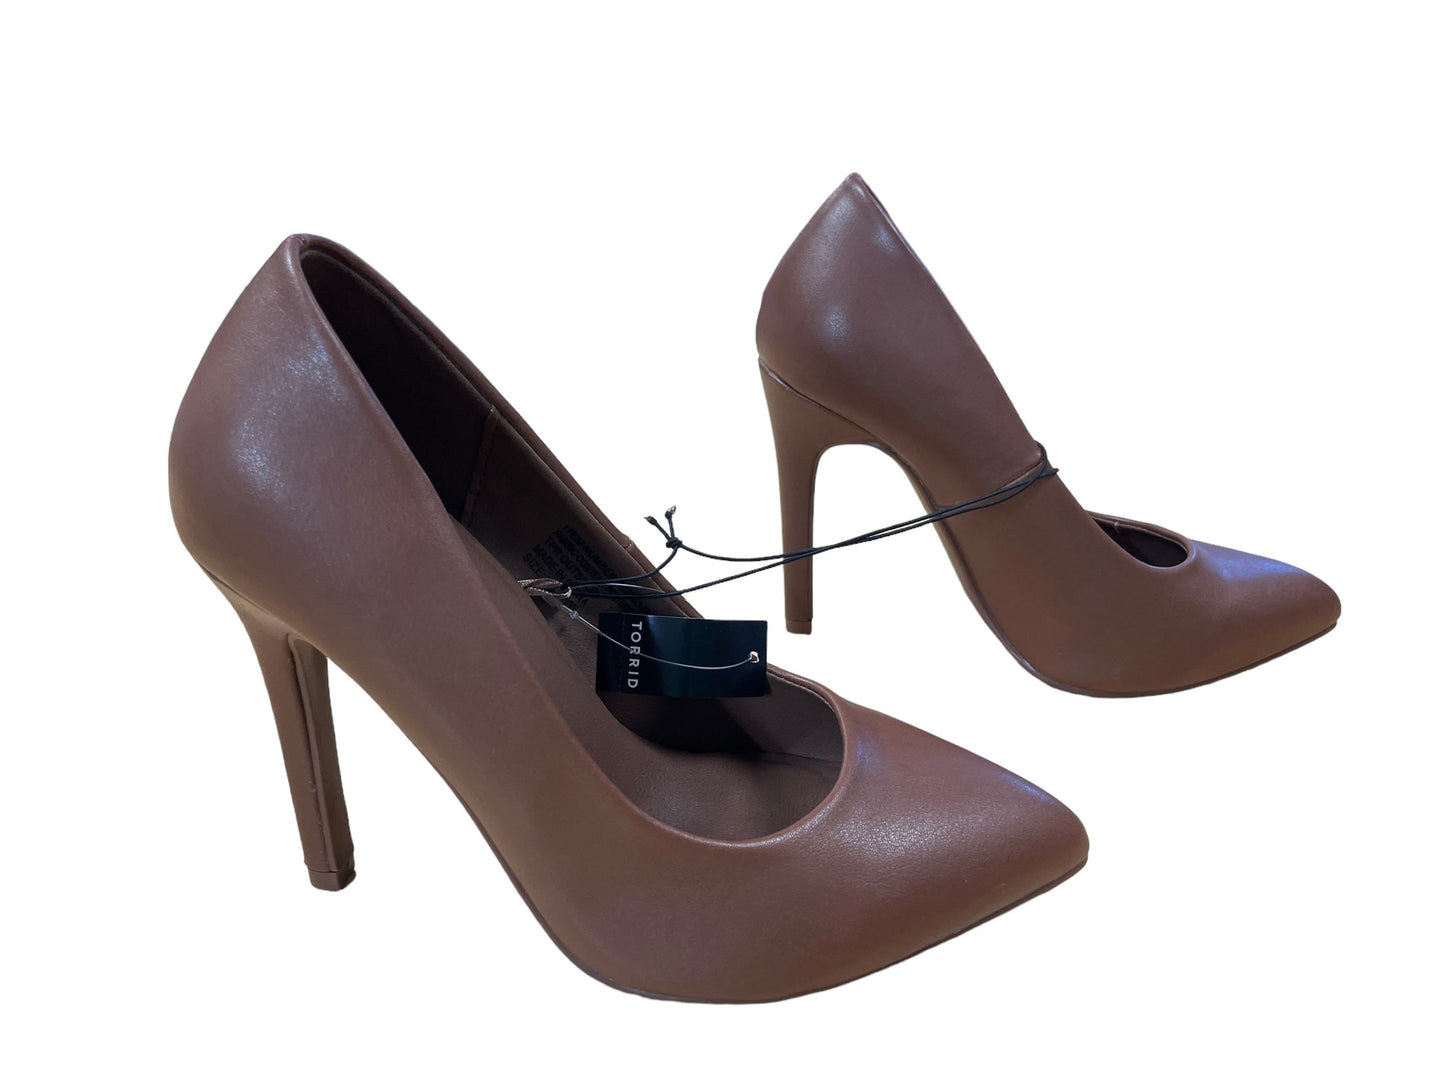 Shoes Heels Stiletto By Torrid  Size: 7